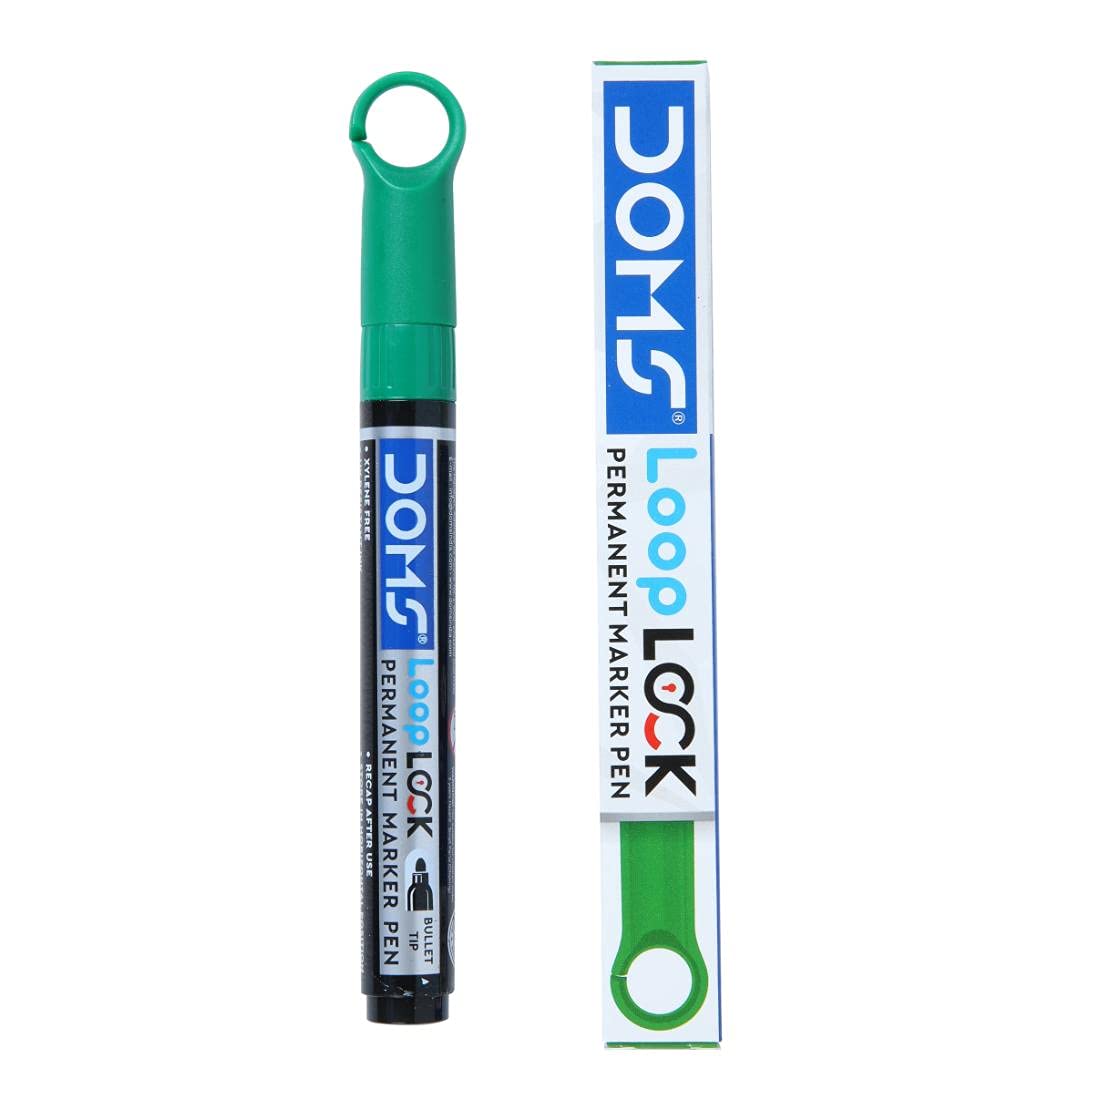 Doms Refilo Non-Toxic Hi-Tech Refillable Loop Lock Permanent Marker Pen (GREEN)